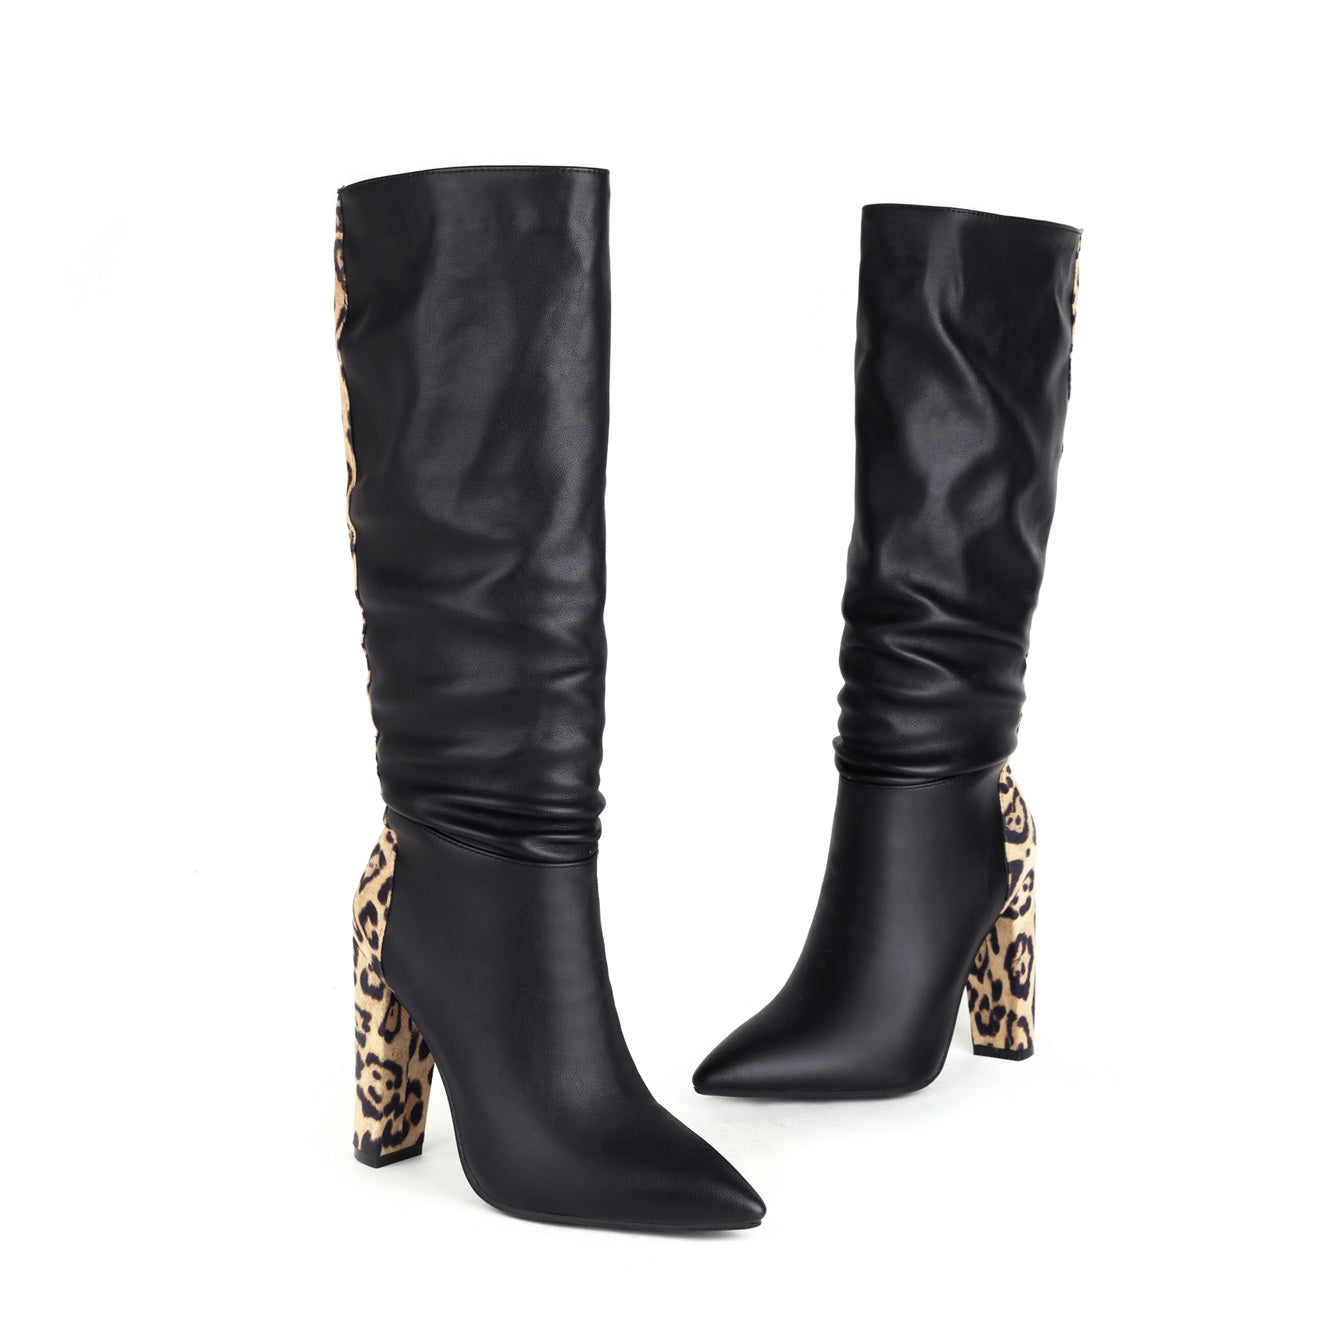 Bigsizeheels Pointed Leopard Print Block Heel Boots - Black freeshipping - bigsizeheel®-size5-size15 -All Plus Sizes Available!